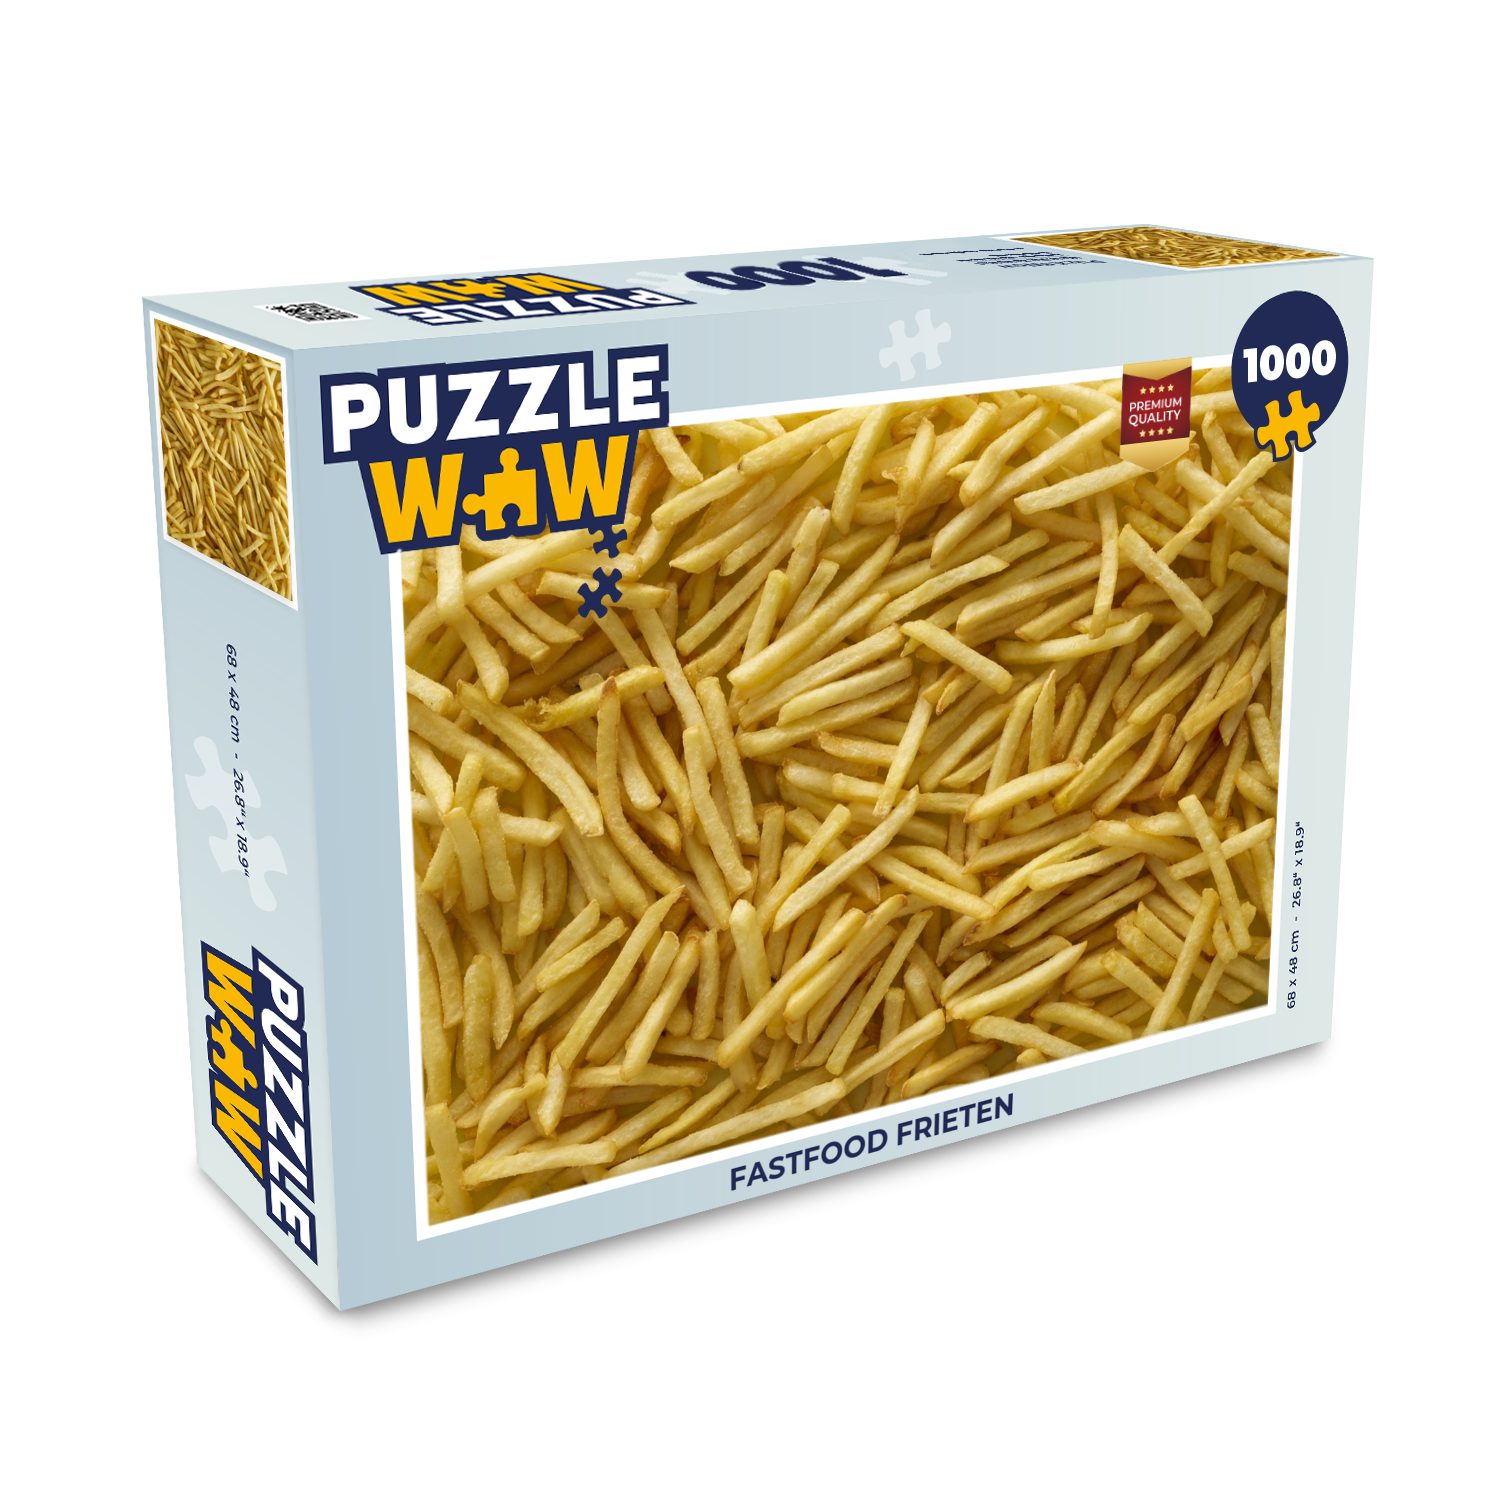 Puzzle Foto-Puzzle, Puzzleteile, 1000 Bilderrätsel, Klassisch frites, Fastfood-Pommes MuchoWow Puzzlespiele,